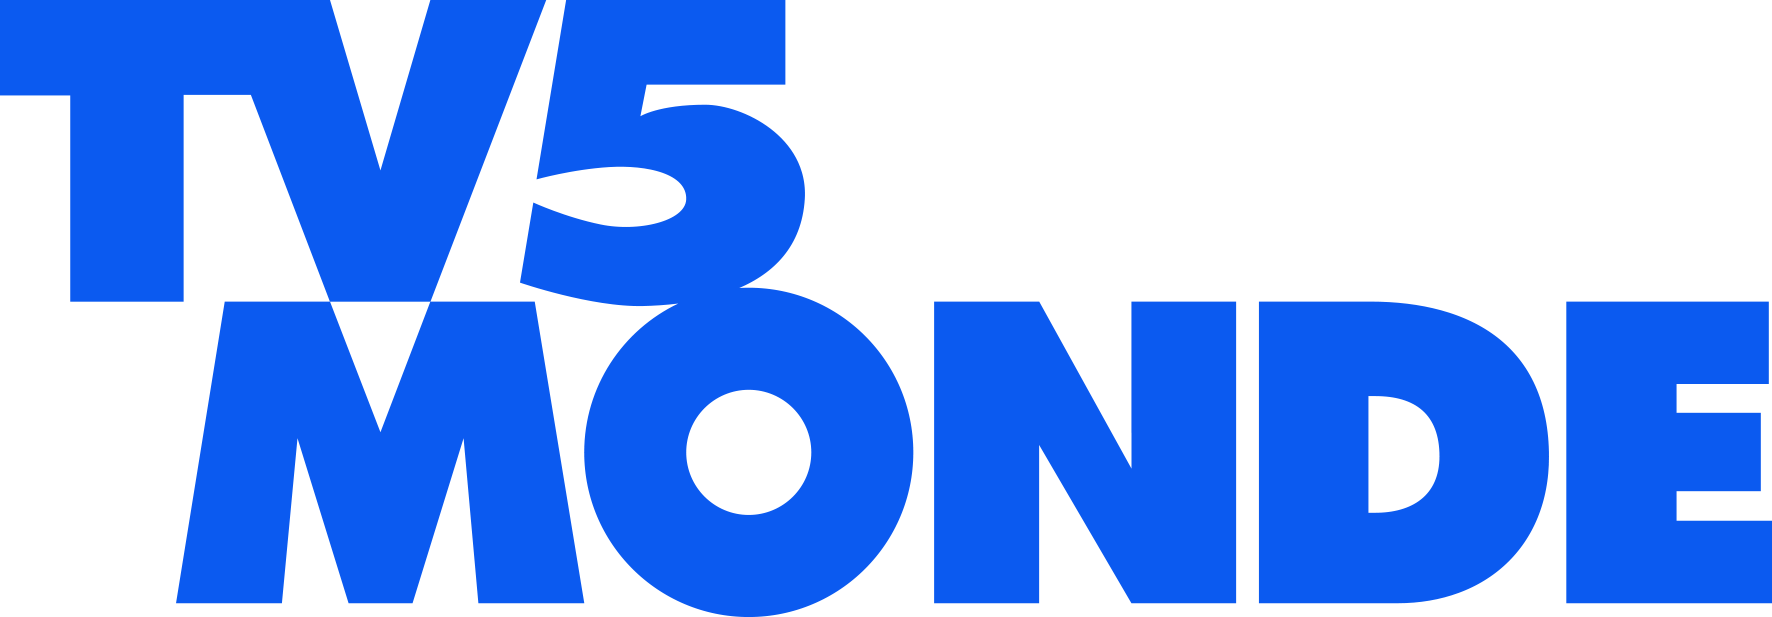 Nouveau logo de TV5 Monde